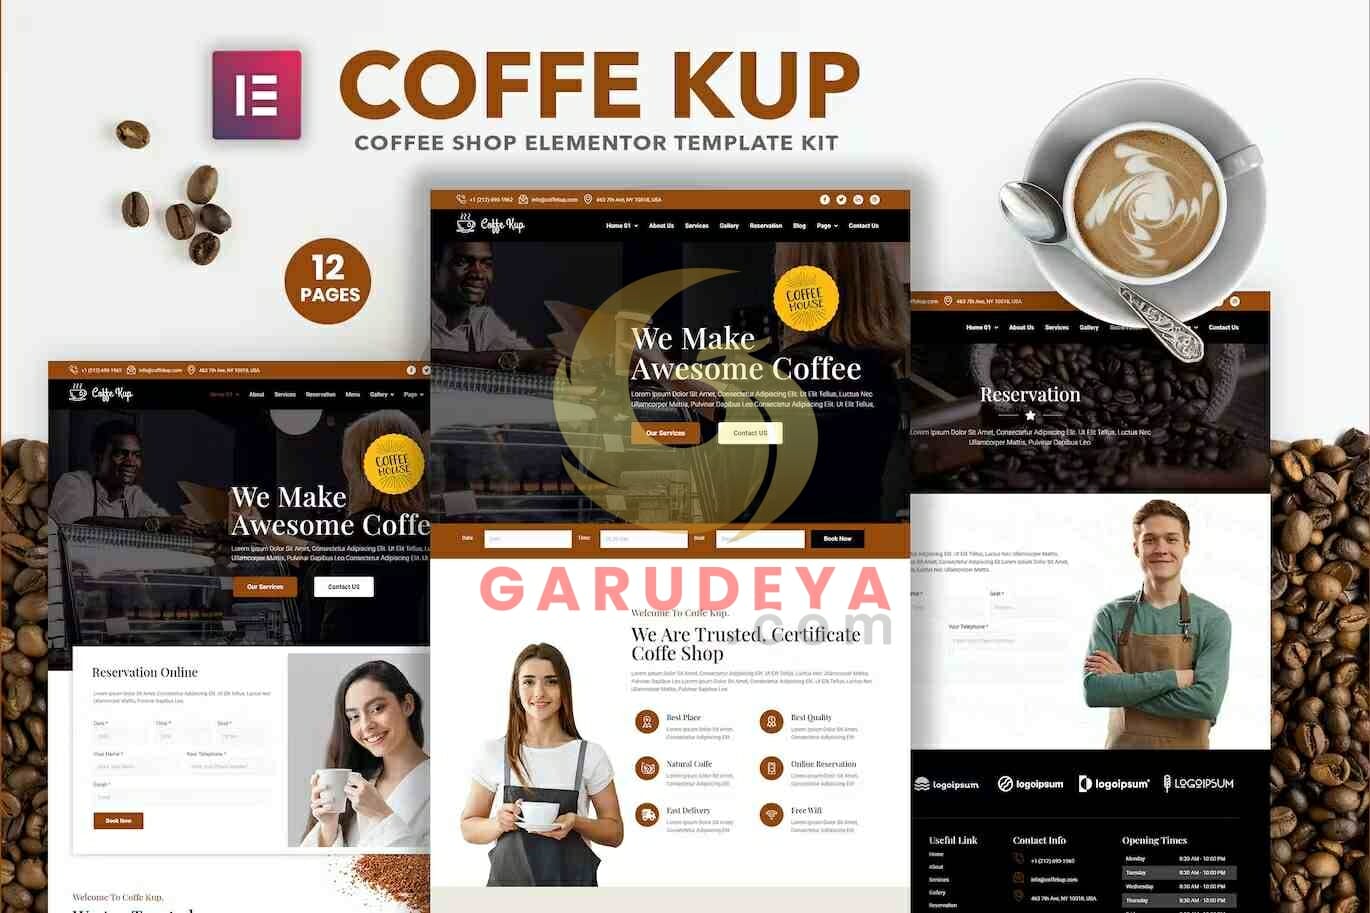 CoffeeKup – Cafe & Coffee Shop Elementor Template Kit